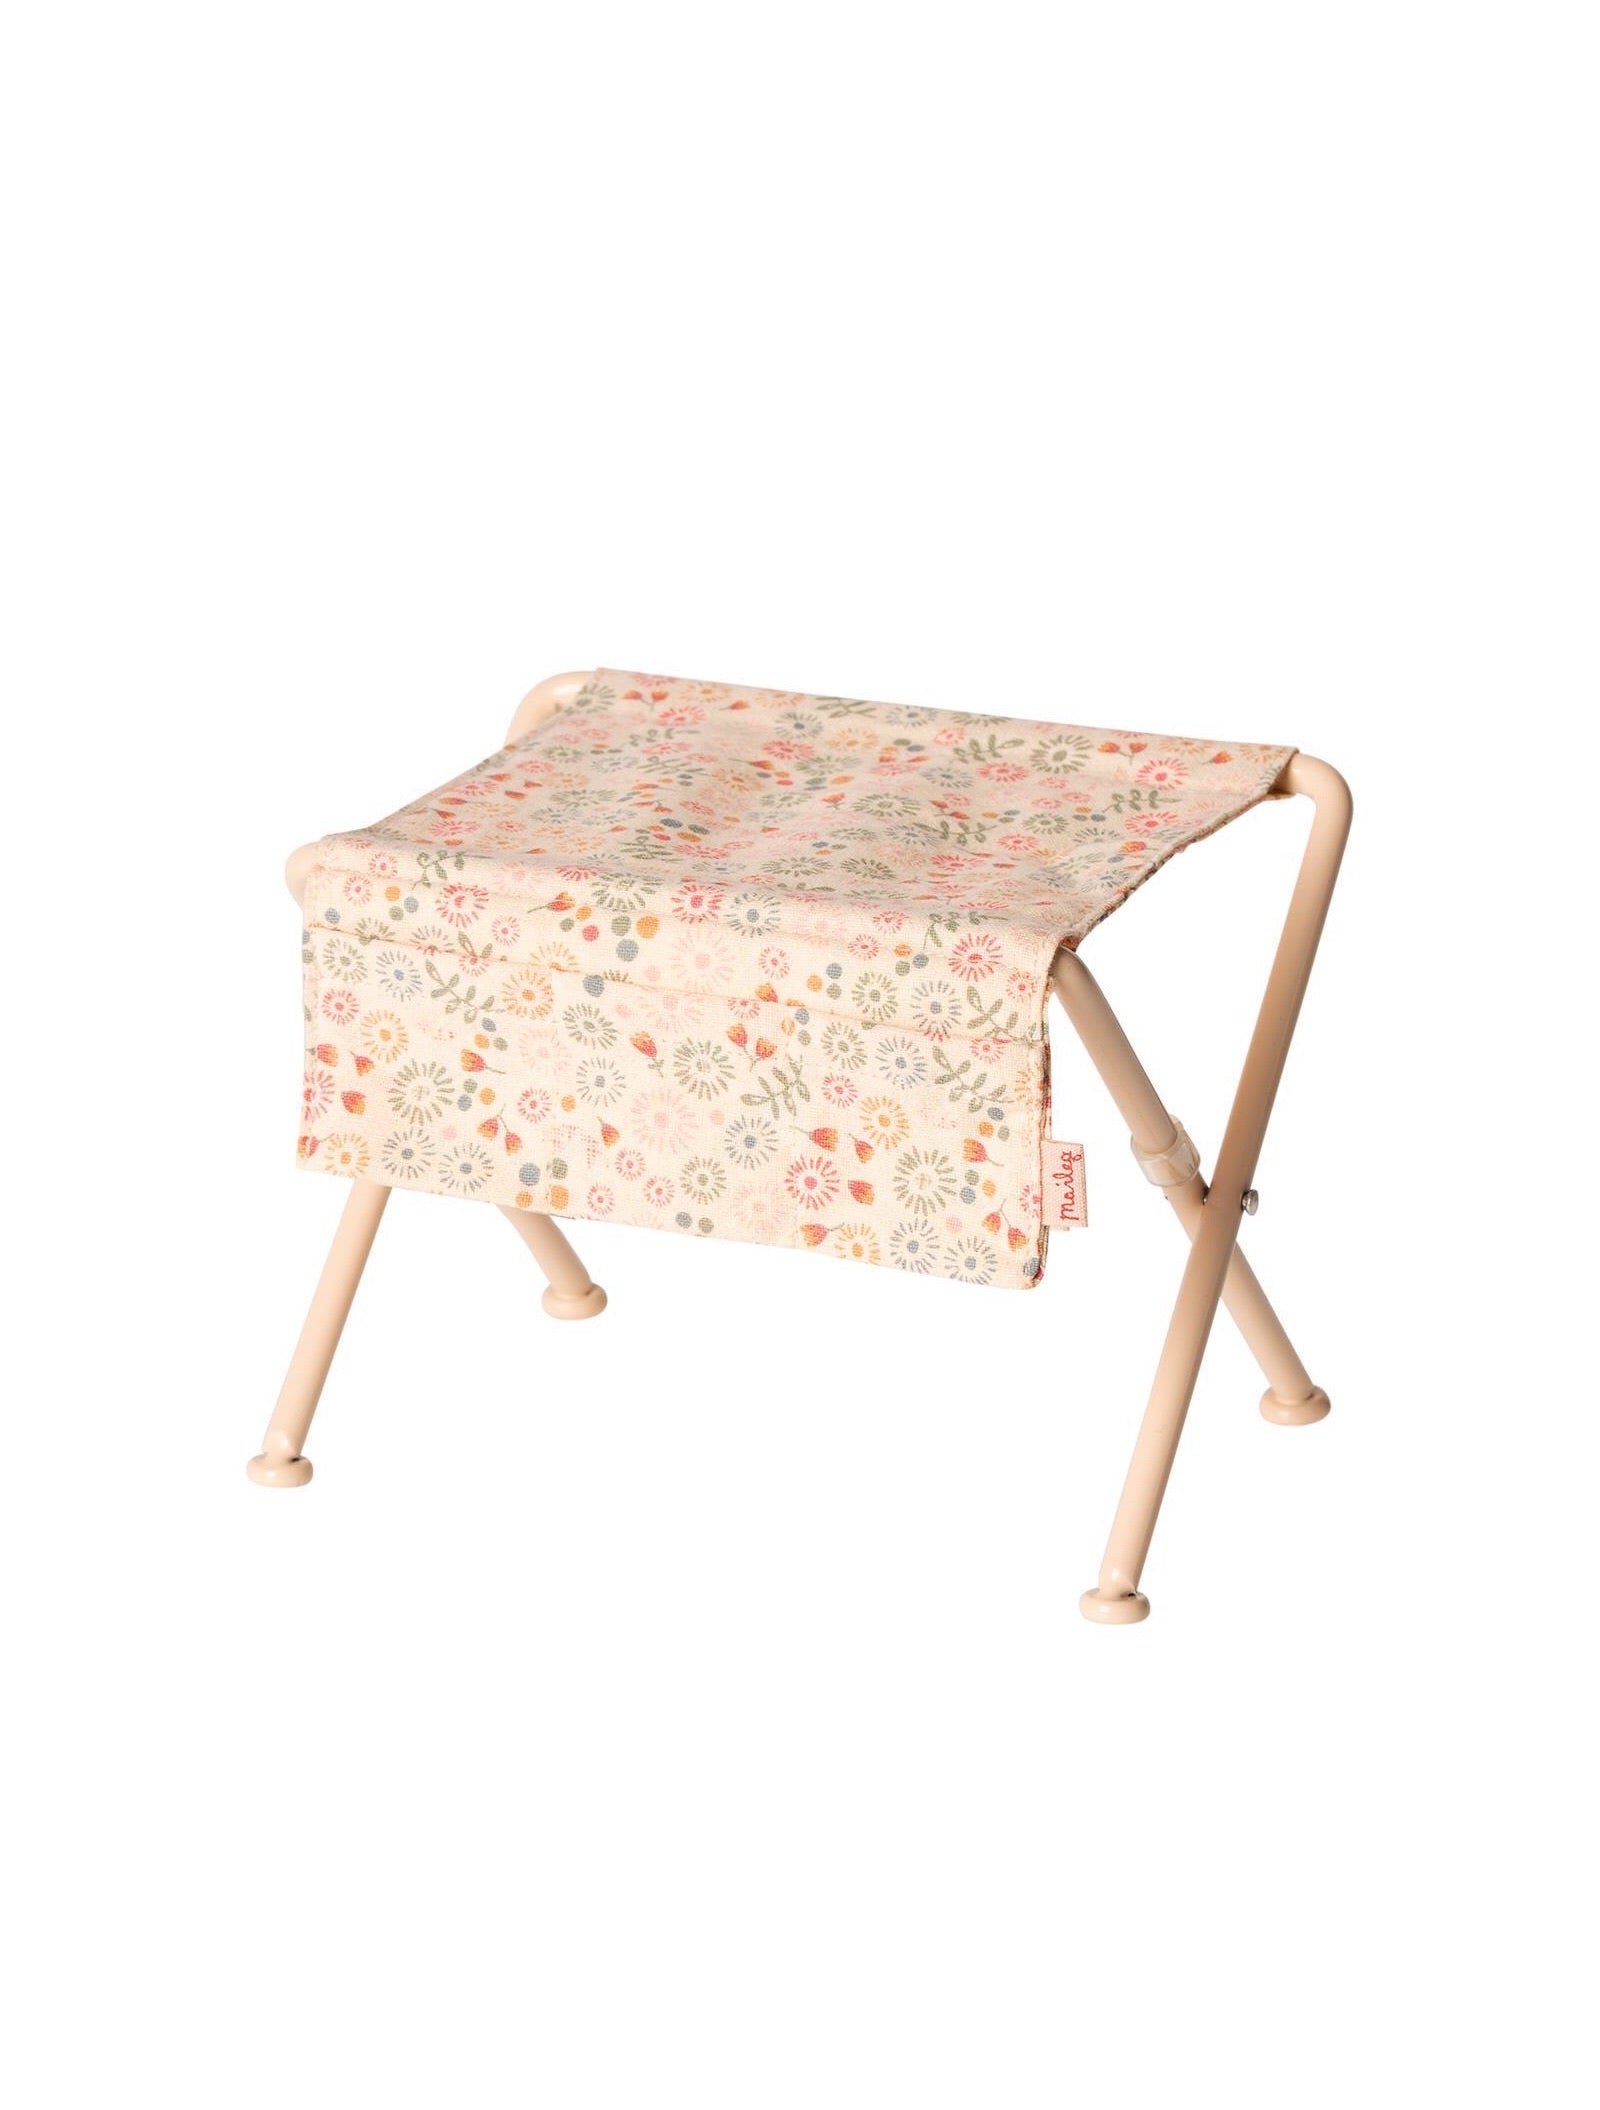 Maileg Nursery Table (Pink): Dollhouse Furniture Essential